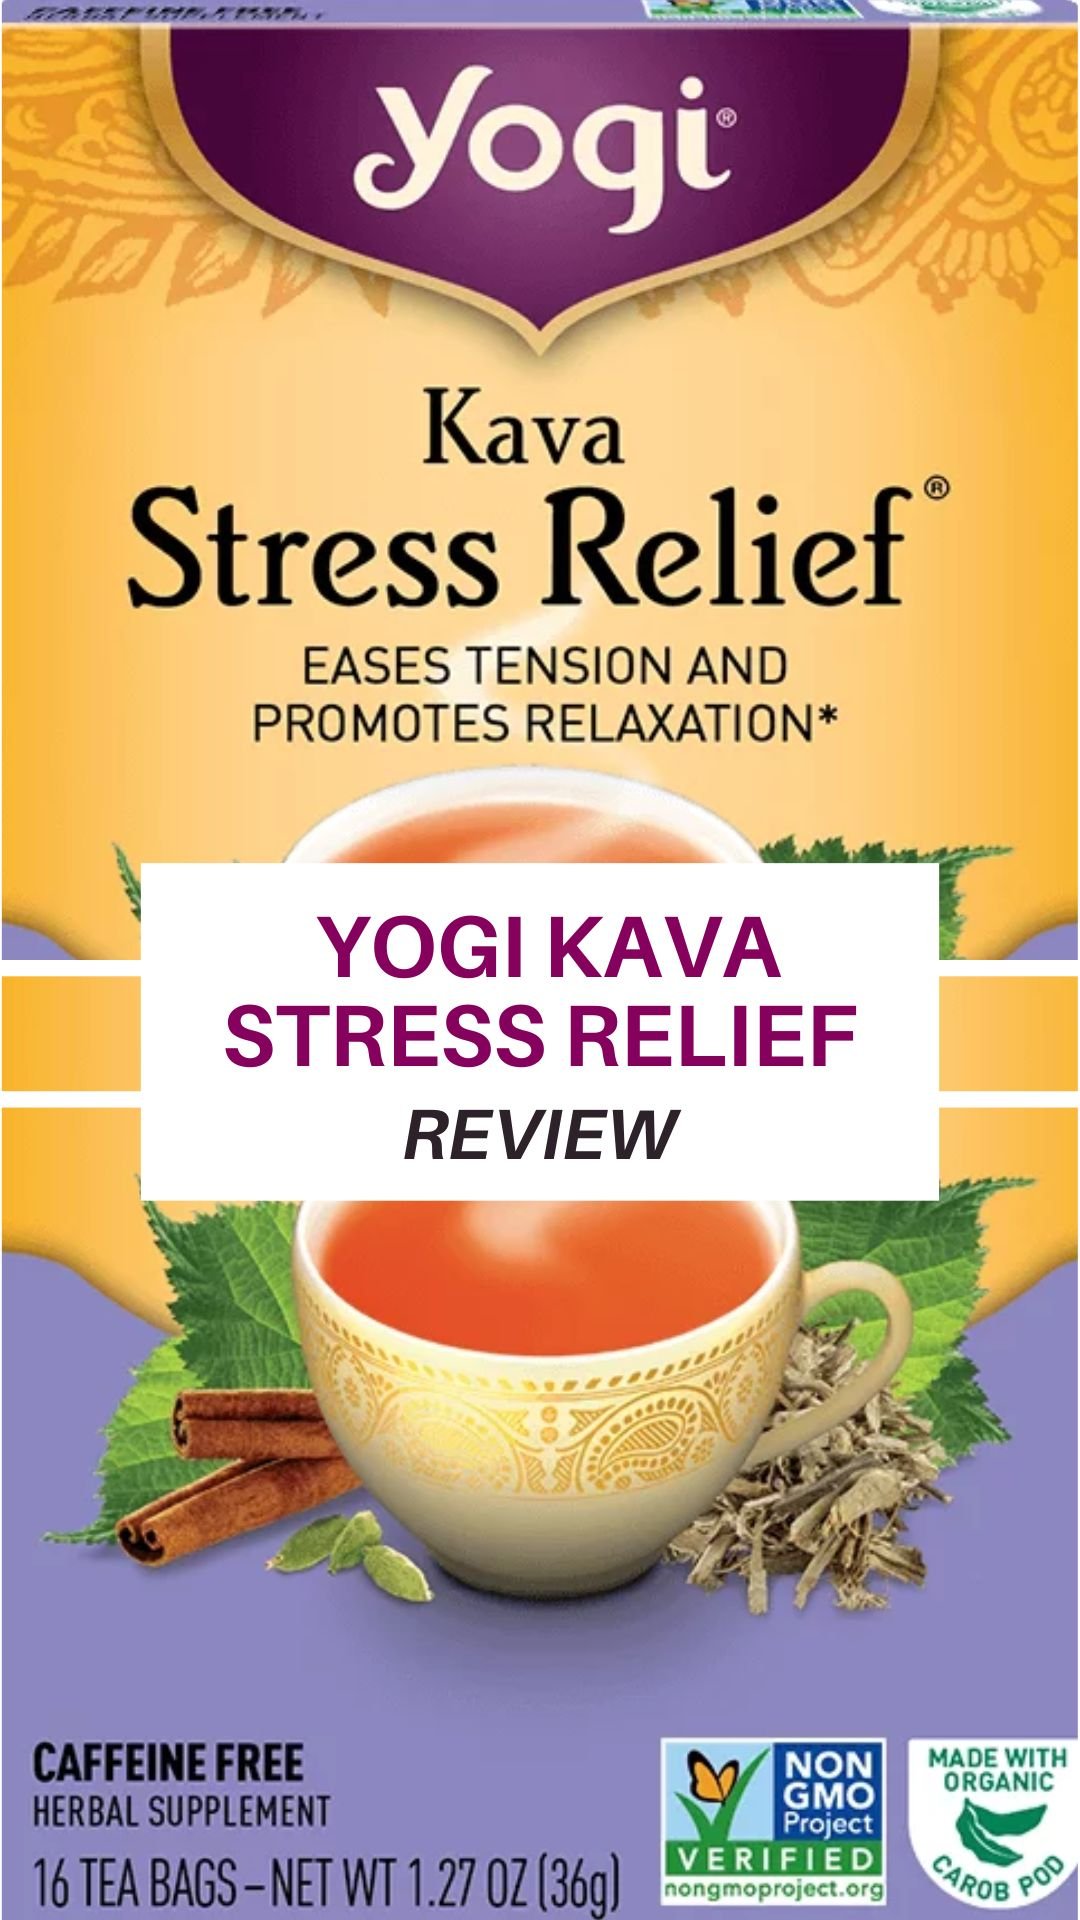 Yogi Tea Kava Stress Relief